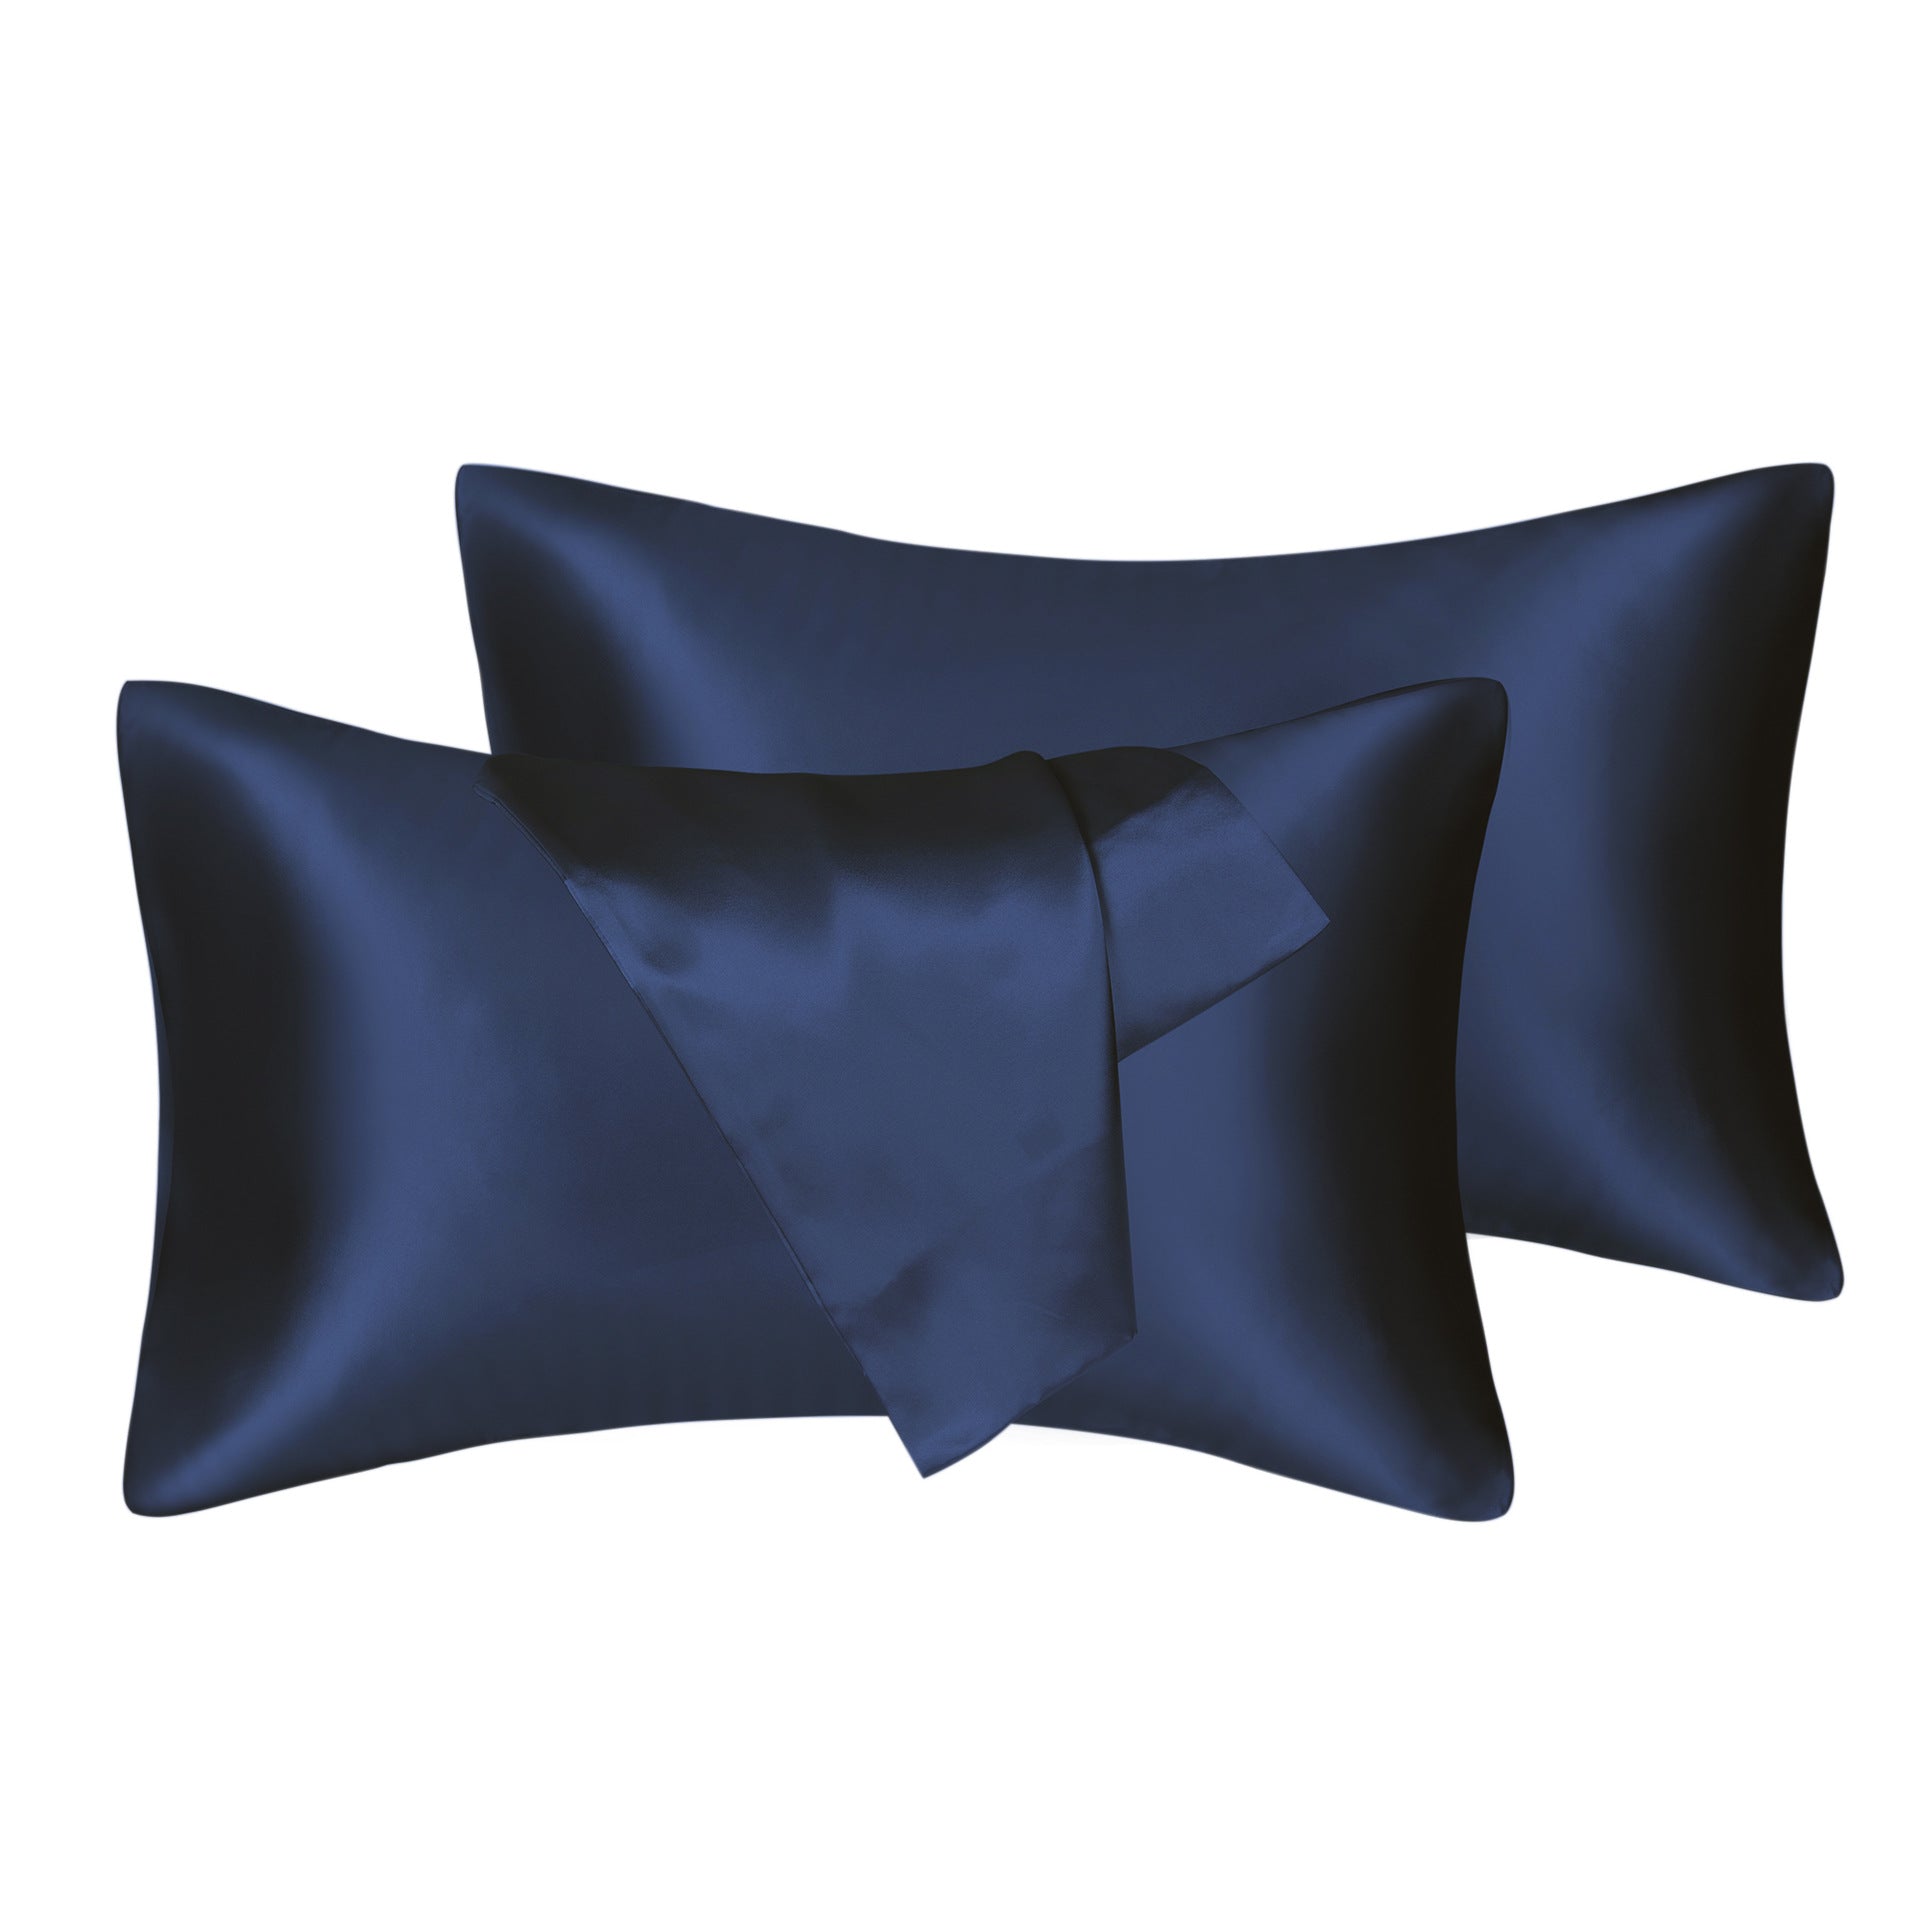  Importikaah-Silk-Pillowcase-single-pack-Elegant-designed-combine-luxury-skincare-haircare-benefits-high-quality-pillowcase